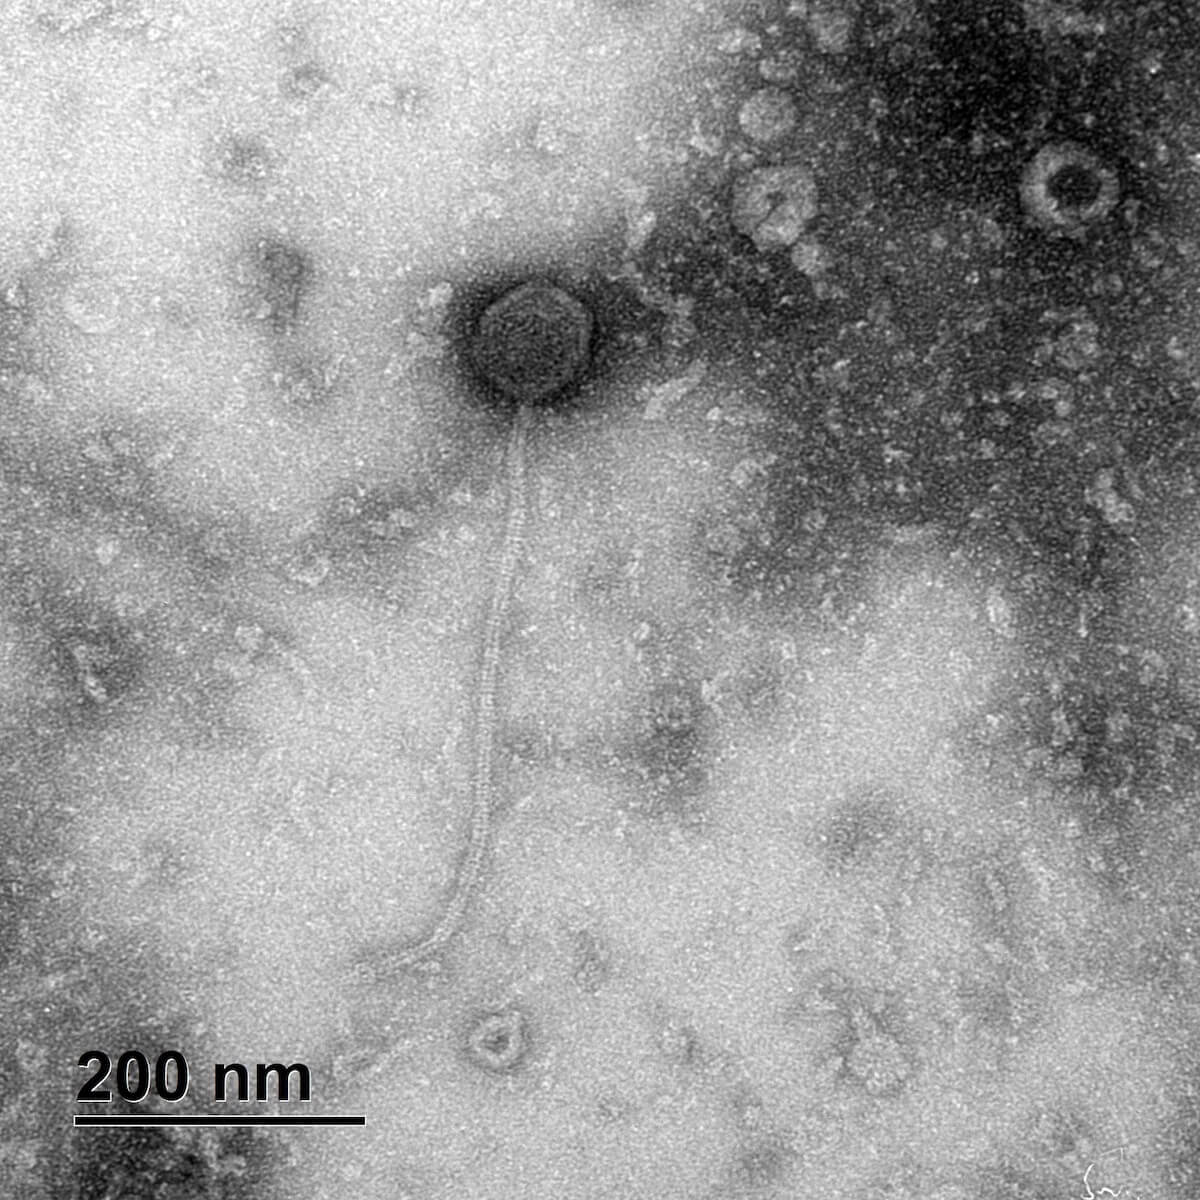 Transmission electron micrographs (TEM) image of phage S. pseud_22s